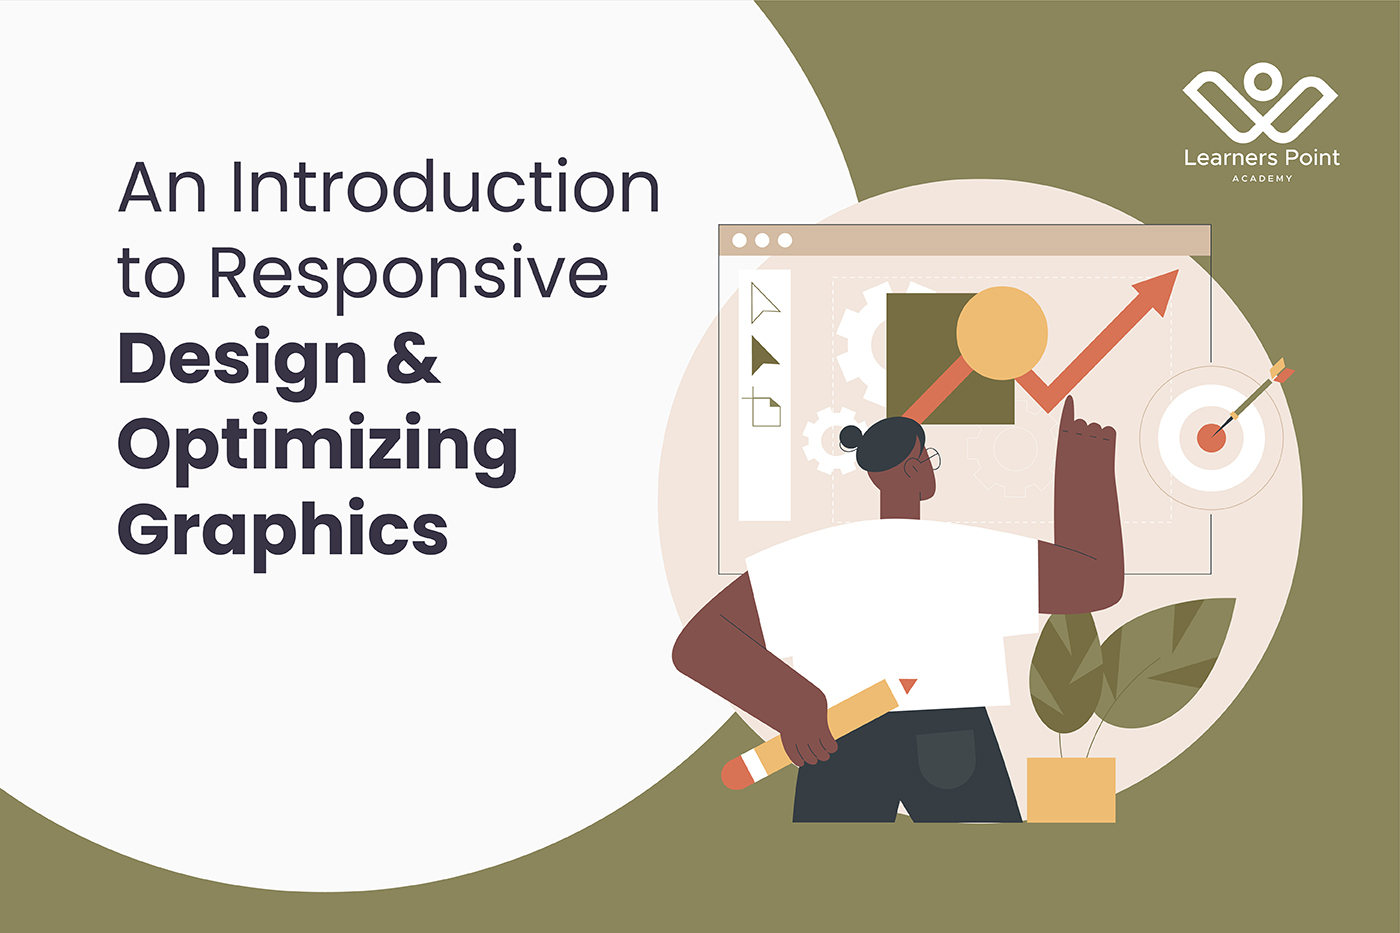 An Introduction to Responsive Design & Optimizing Graphics